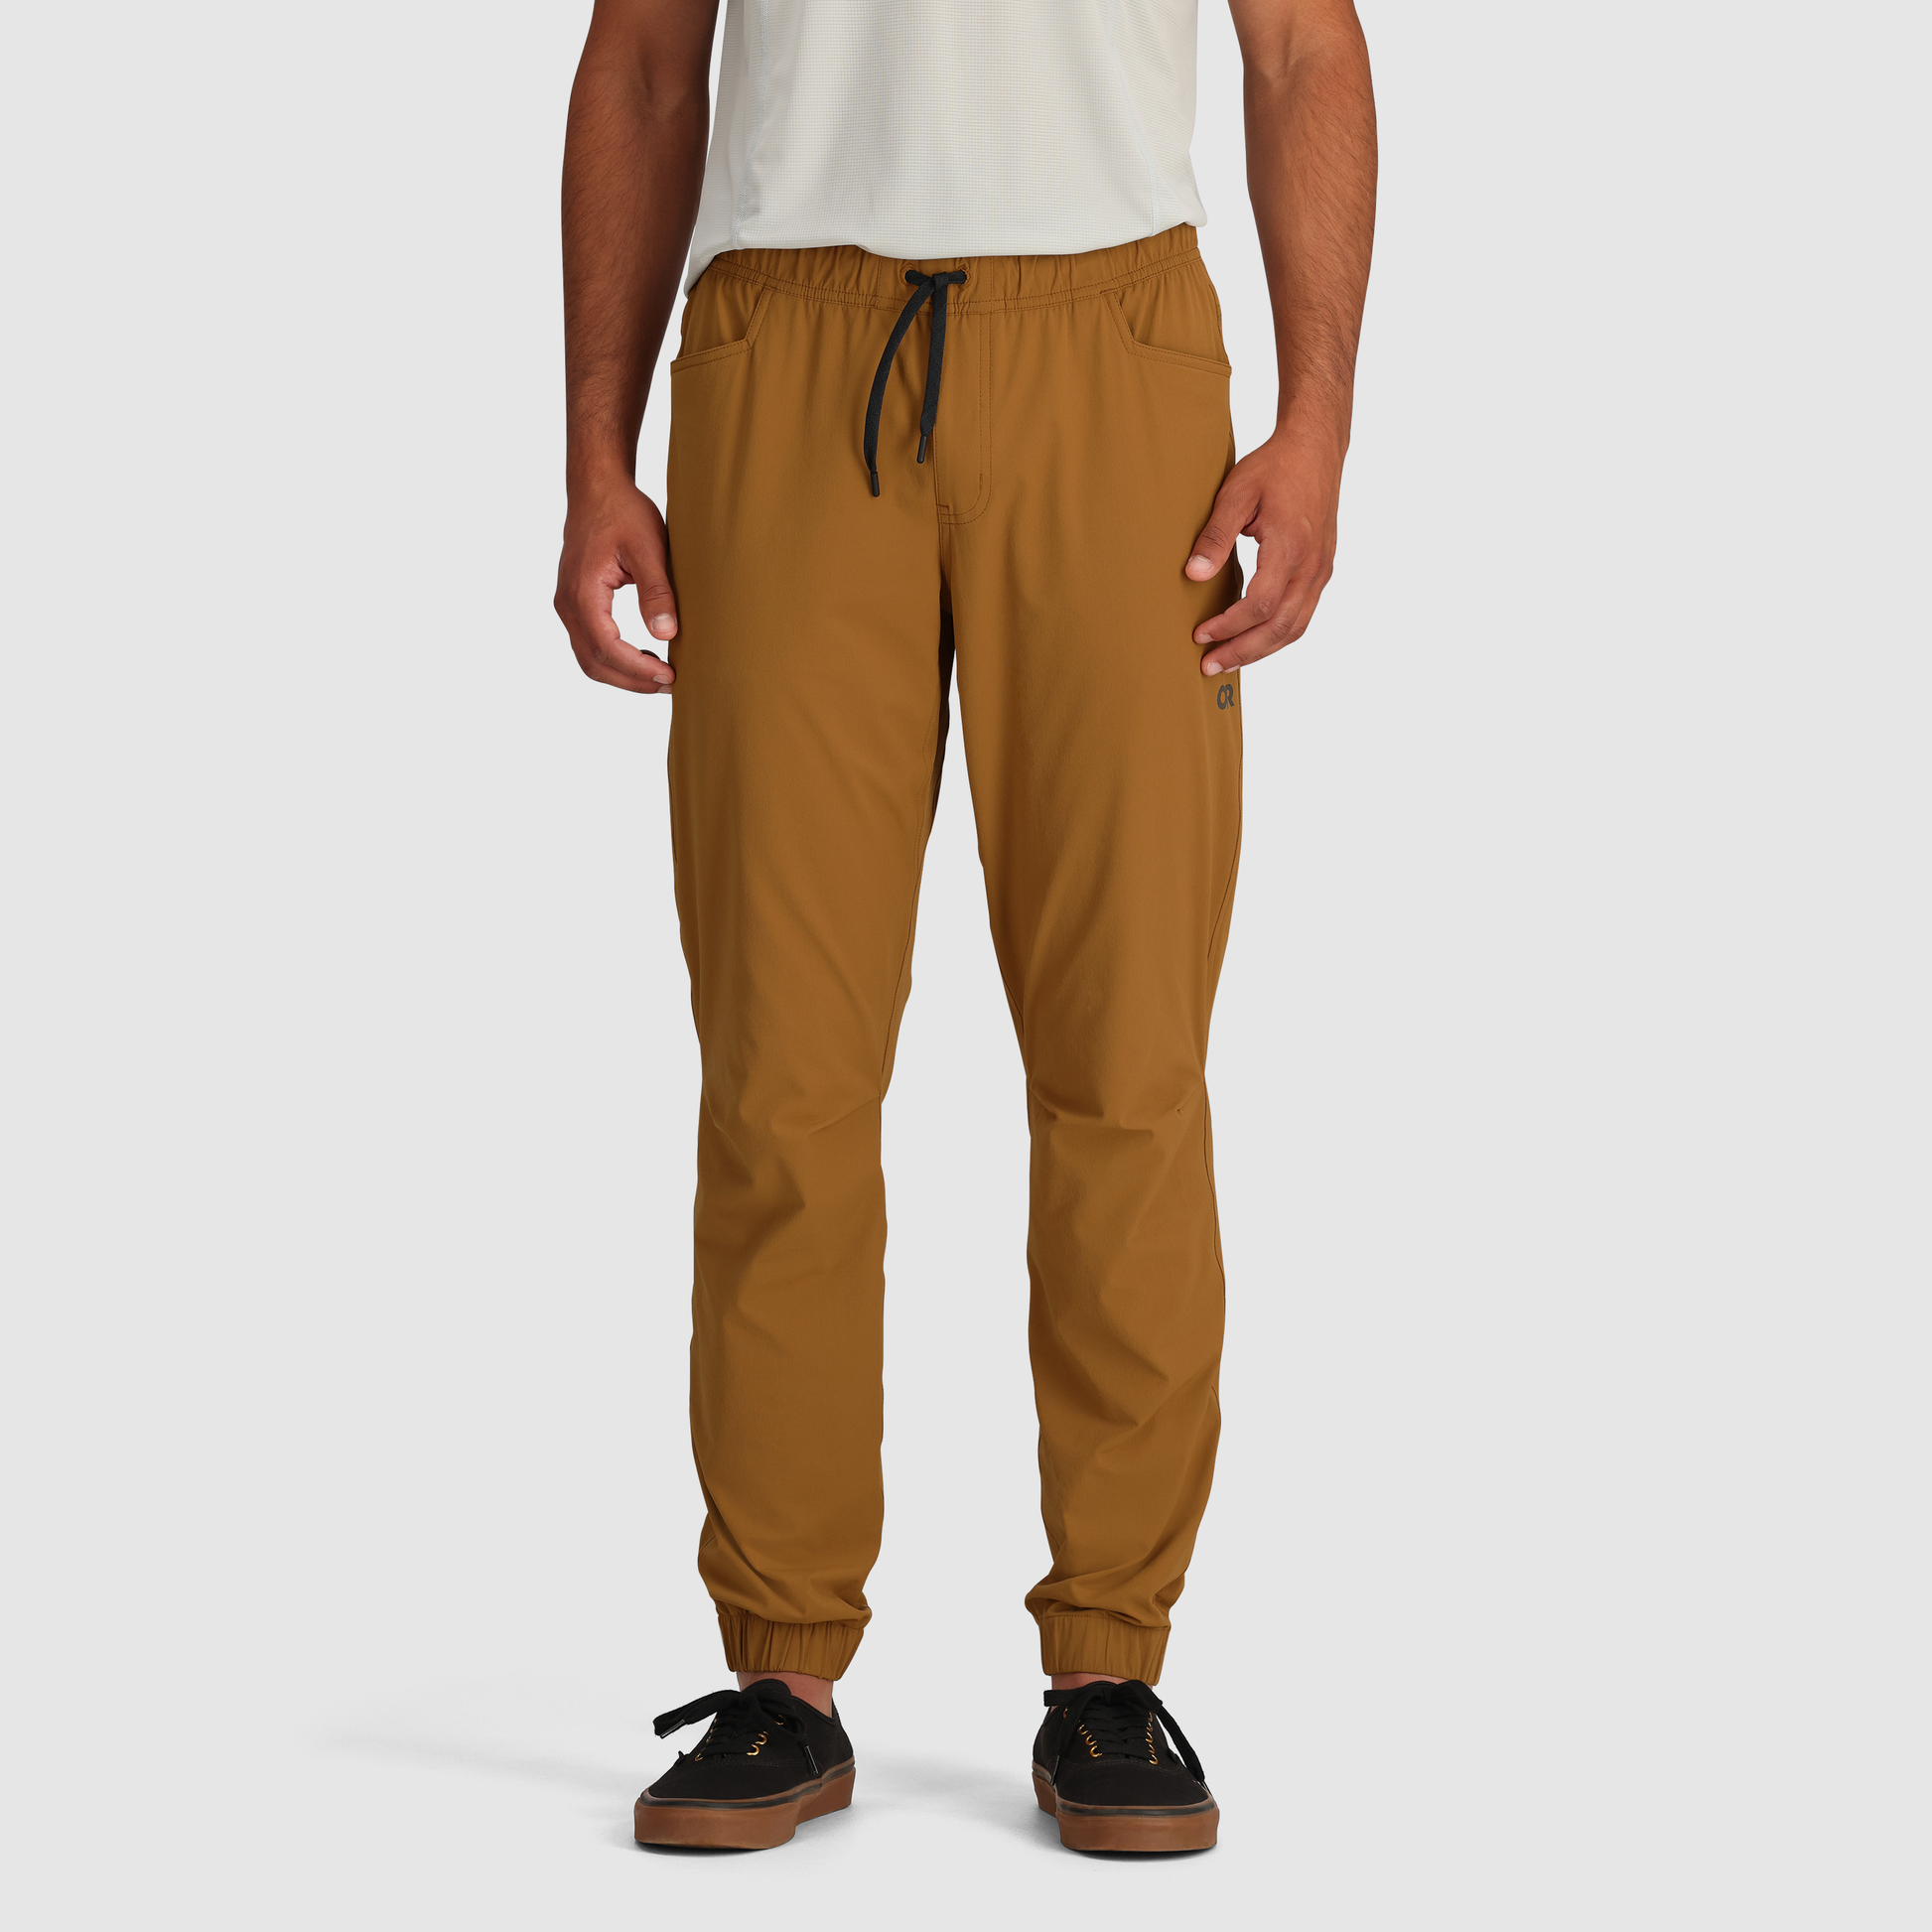 Wholesale Men's Drawstring Stretch Jogger Pants Khaki